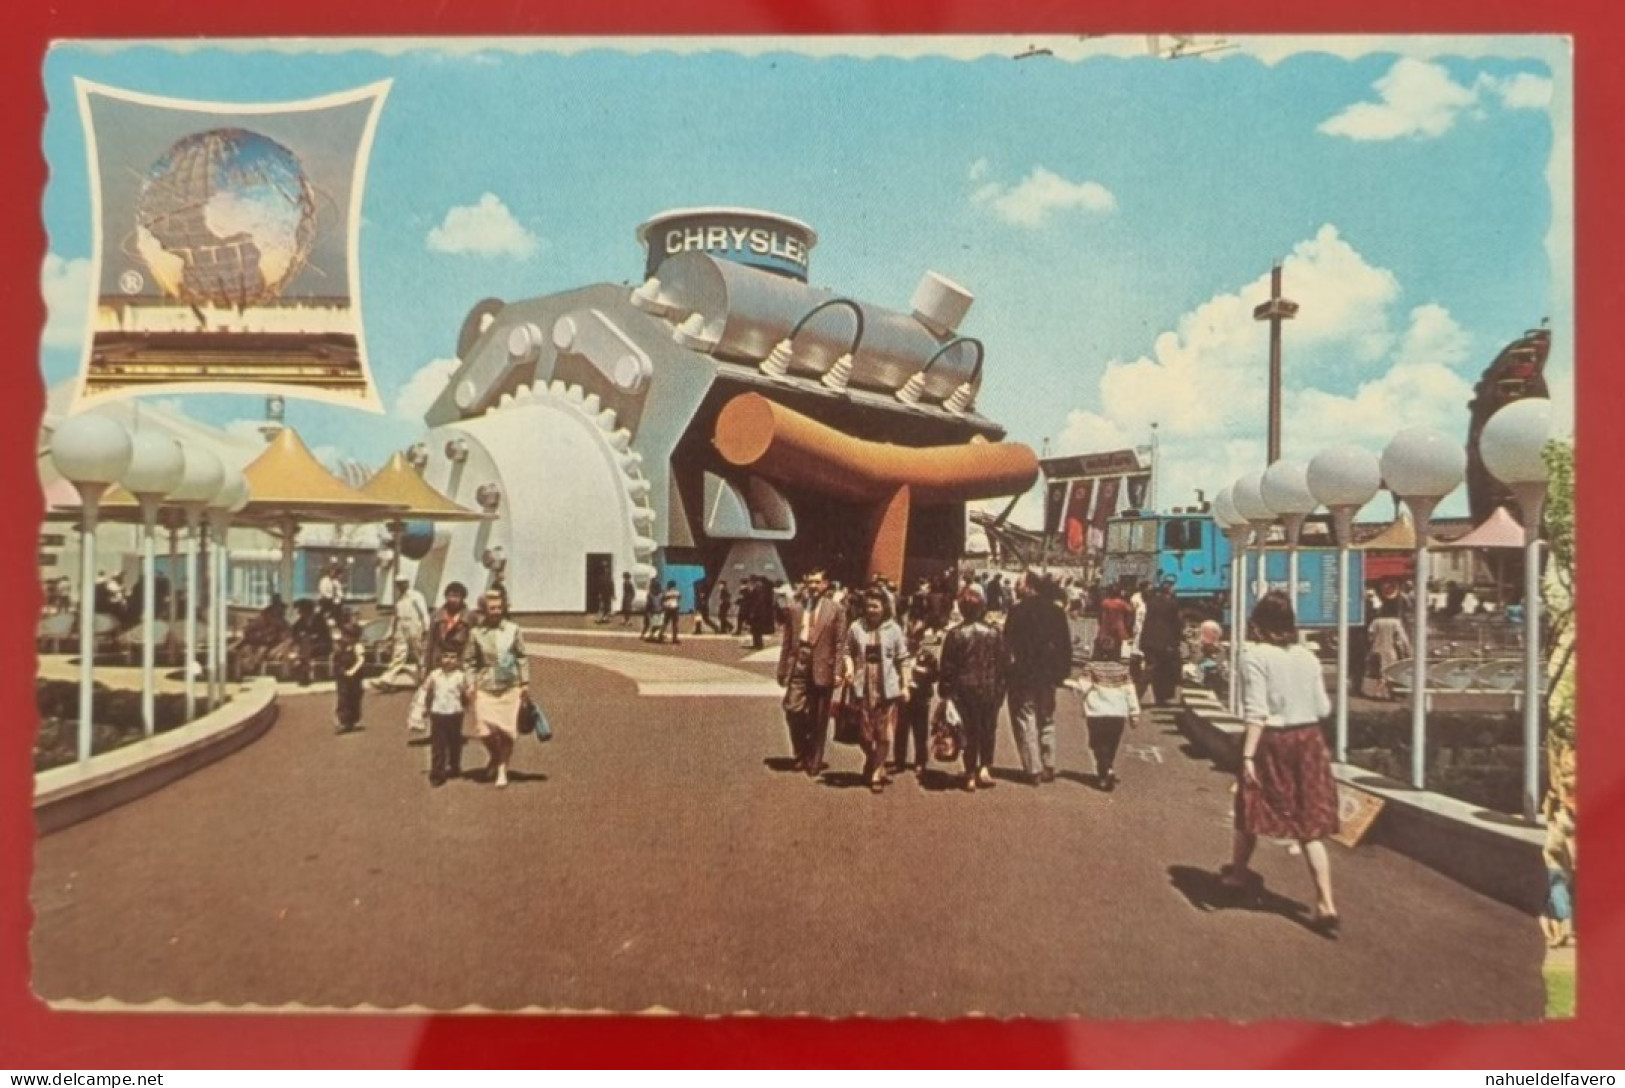 Uncirculated Postcard - USA - NY, NEW YORK WORLD'S FAIR 1964-65 - THIS IS CHRYSKER CORPORATION'S GIANT - Tentoonstellingen